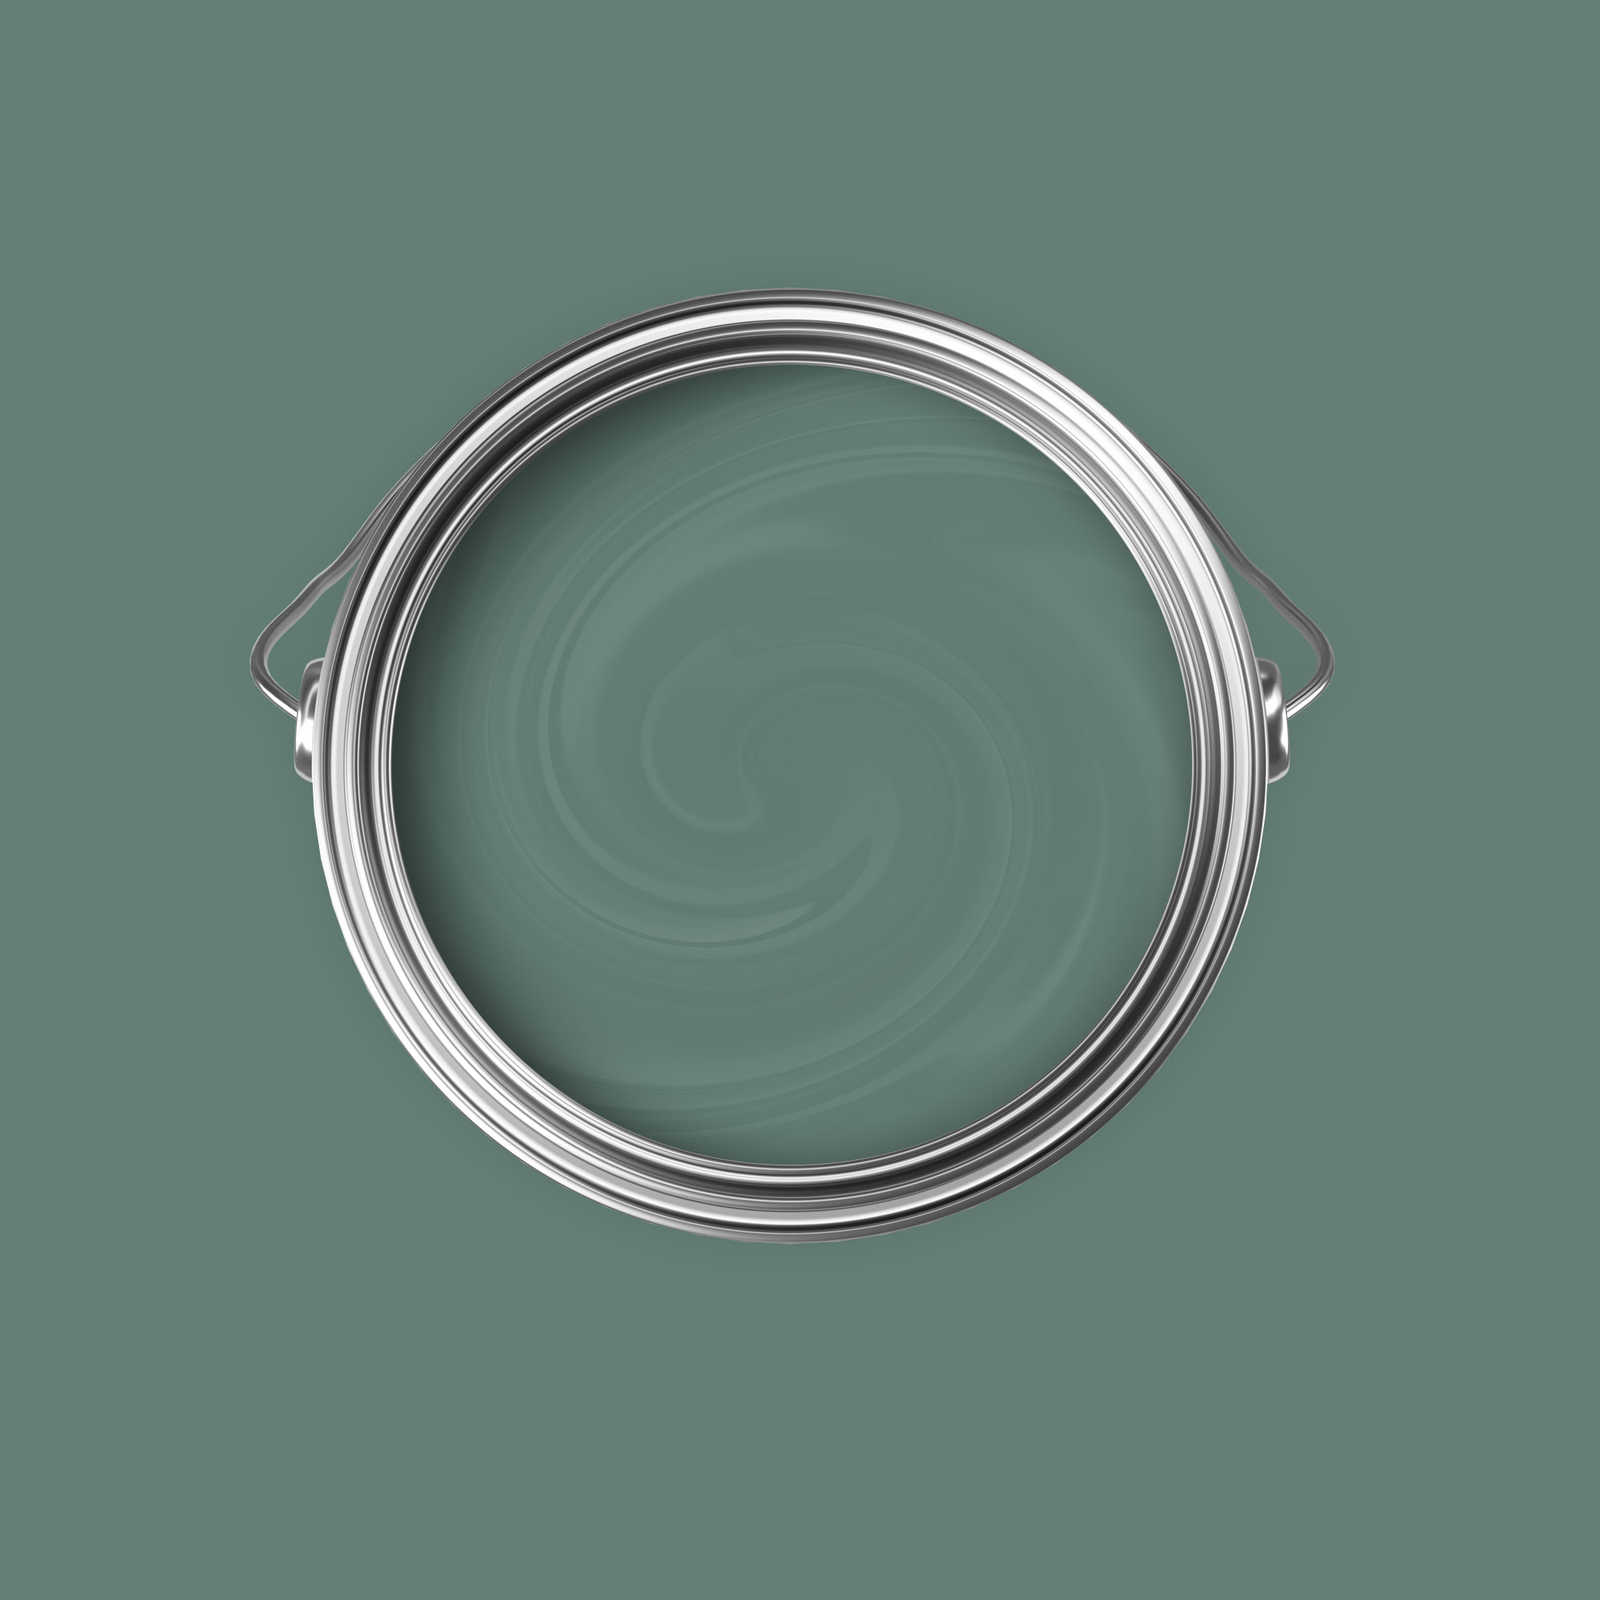             Premium Wandfarbe ruhiges Eukalyptus »Expressive Emerald« NW410 – 5 Liter
        